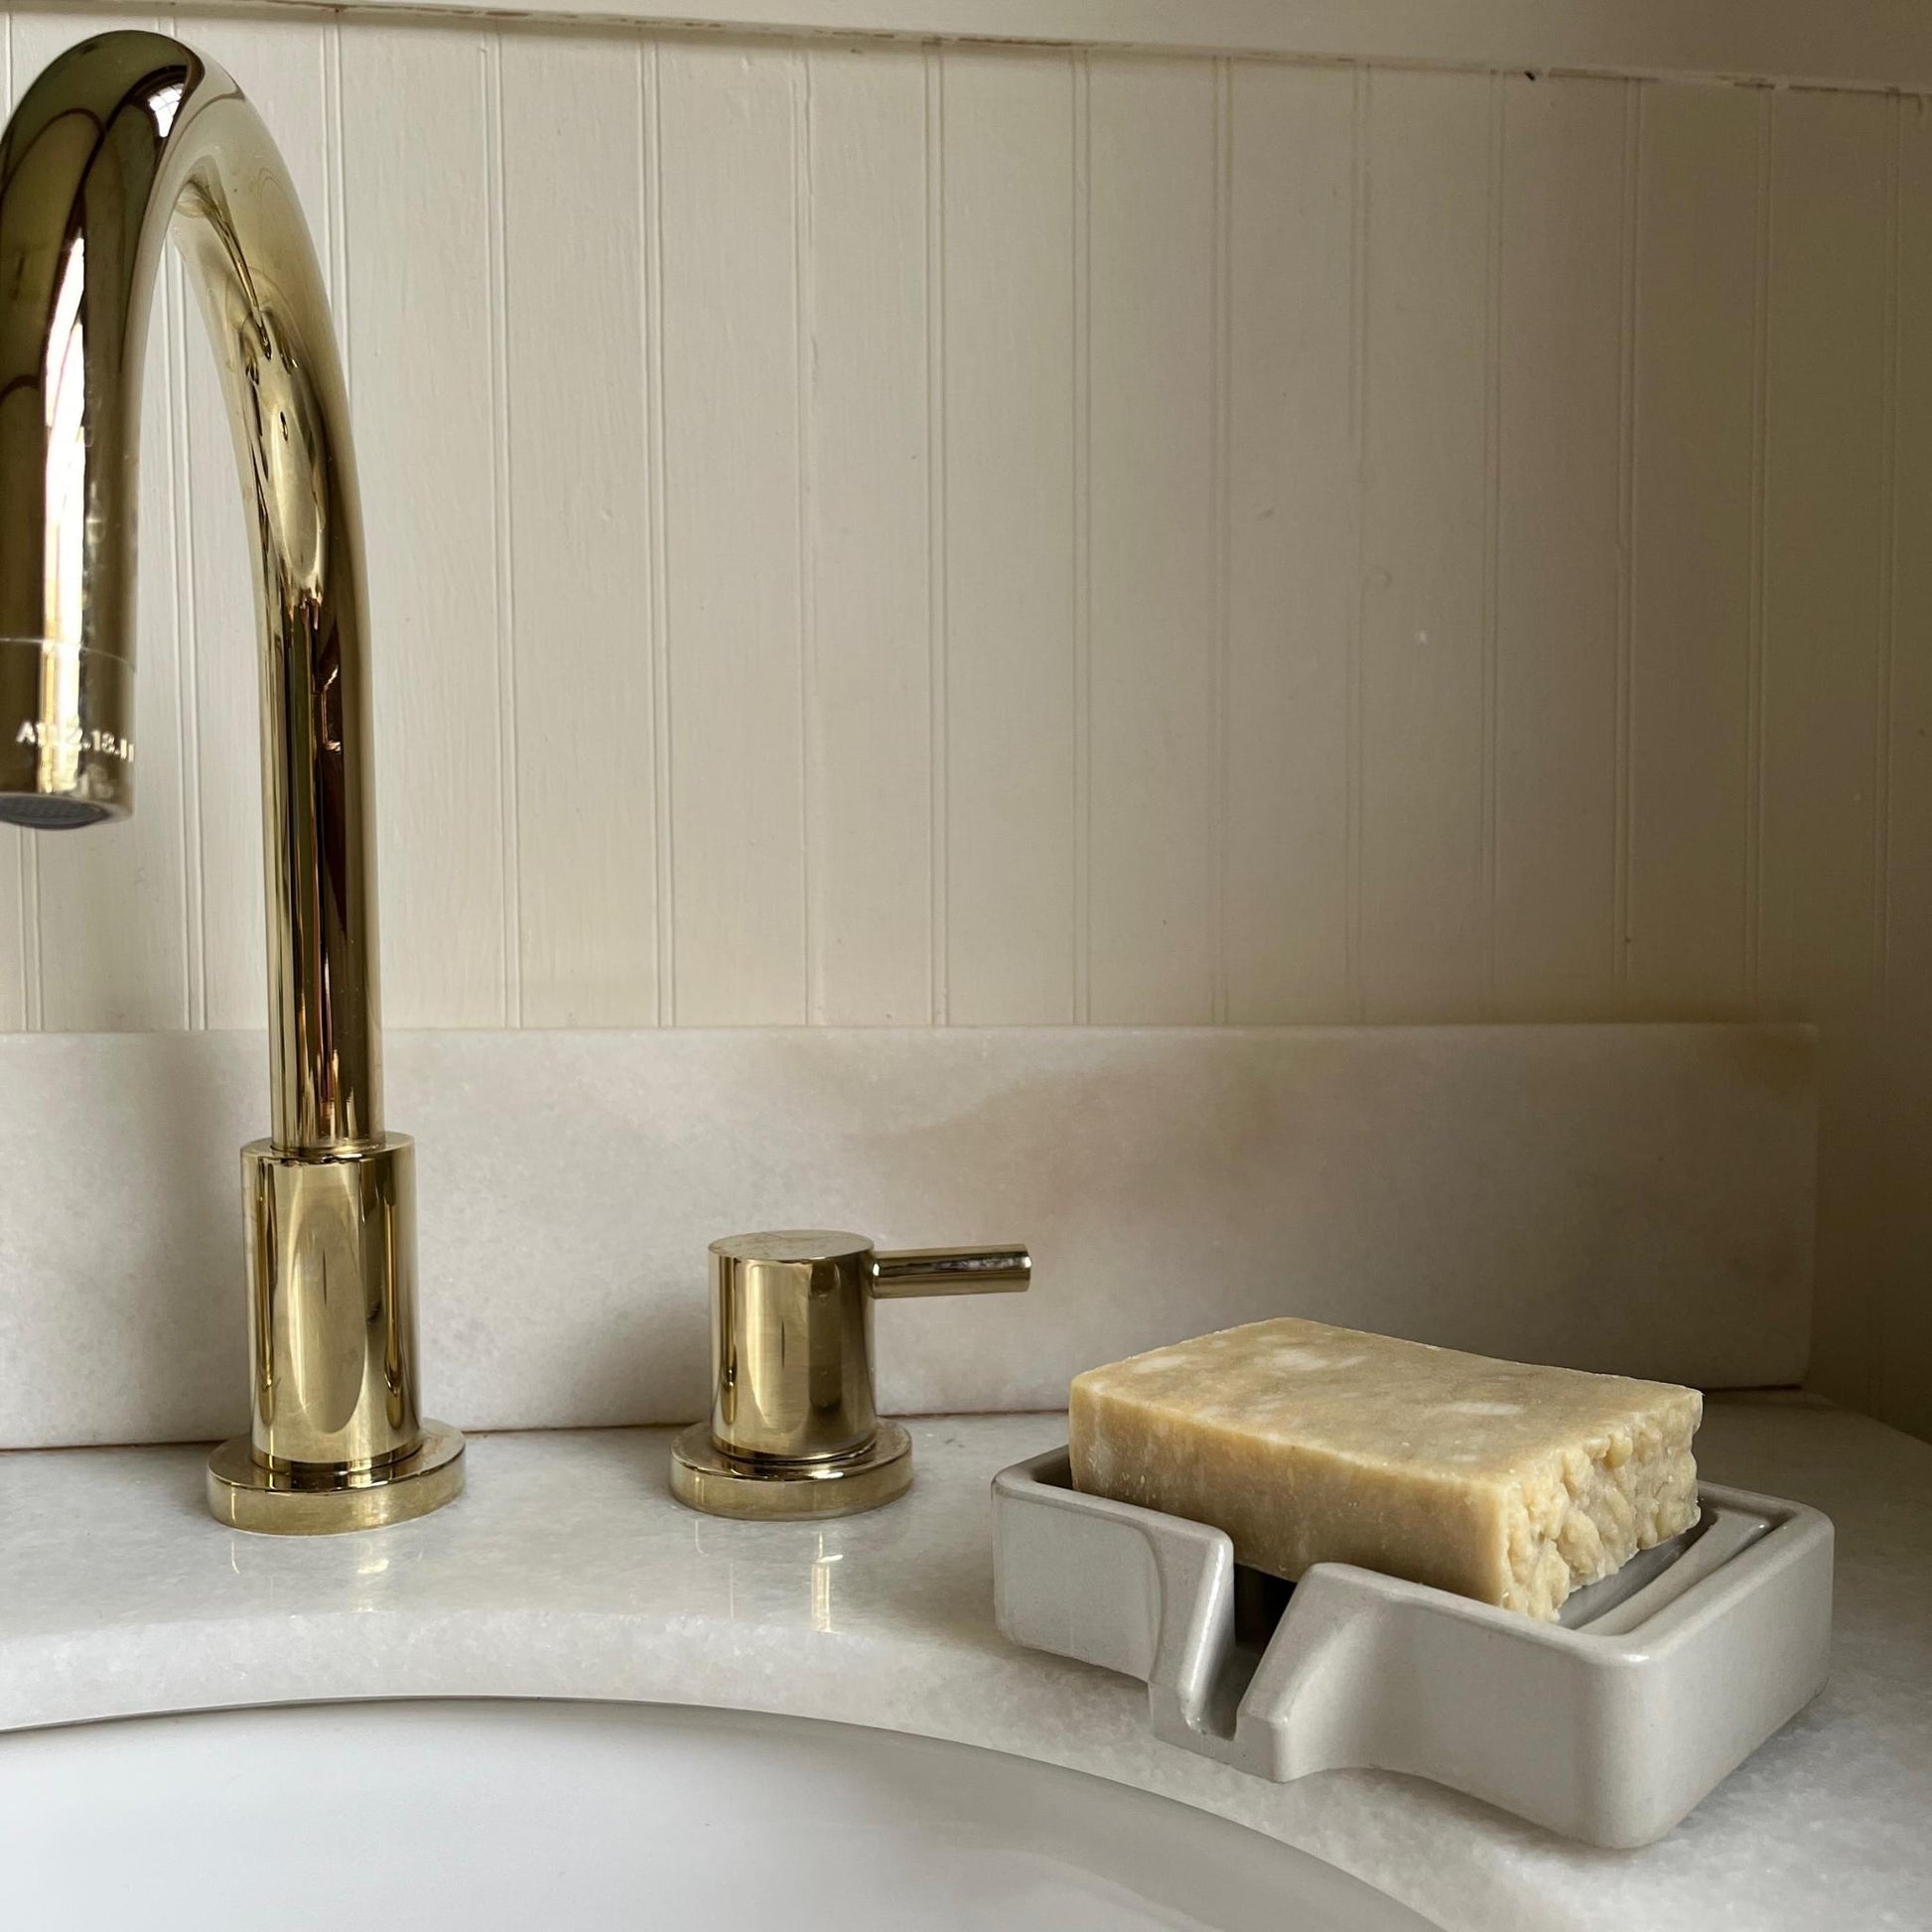 Concrete Draining Soap Dish, Sink Soap Holder, Bathroom